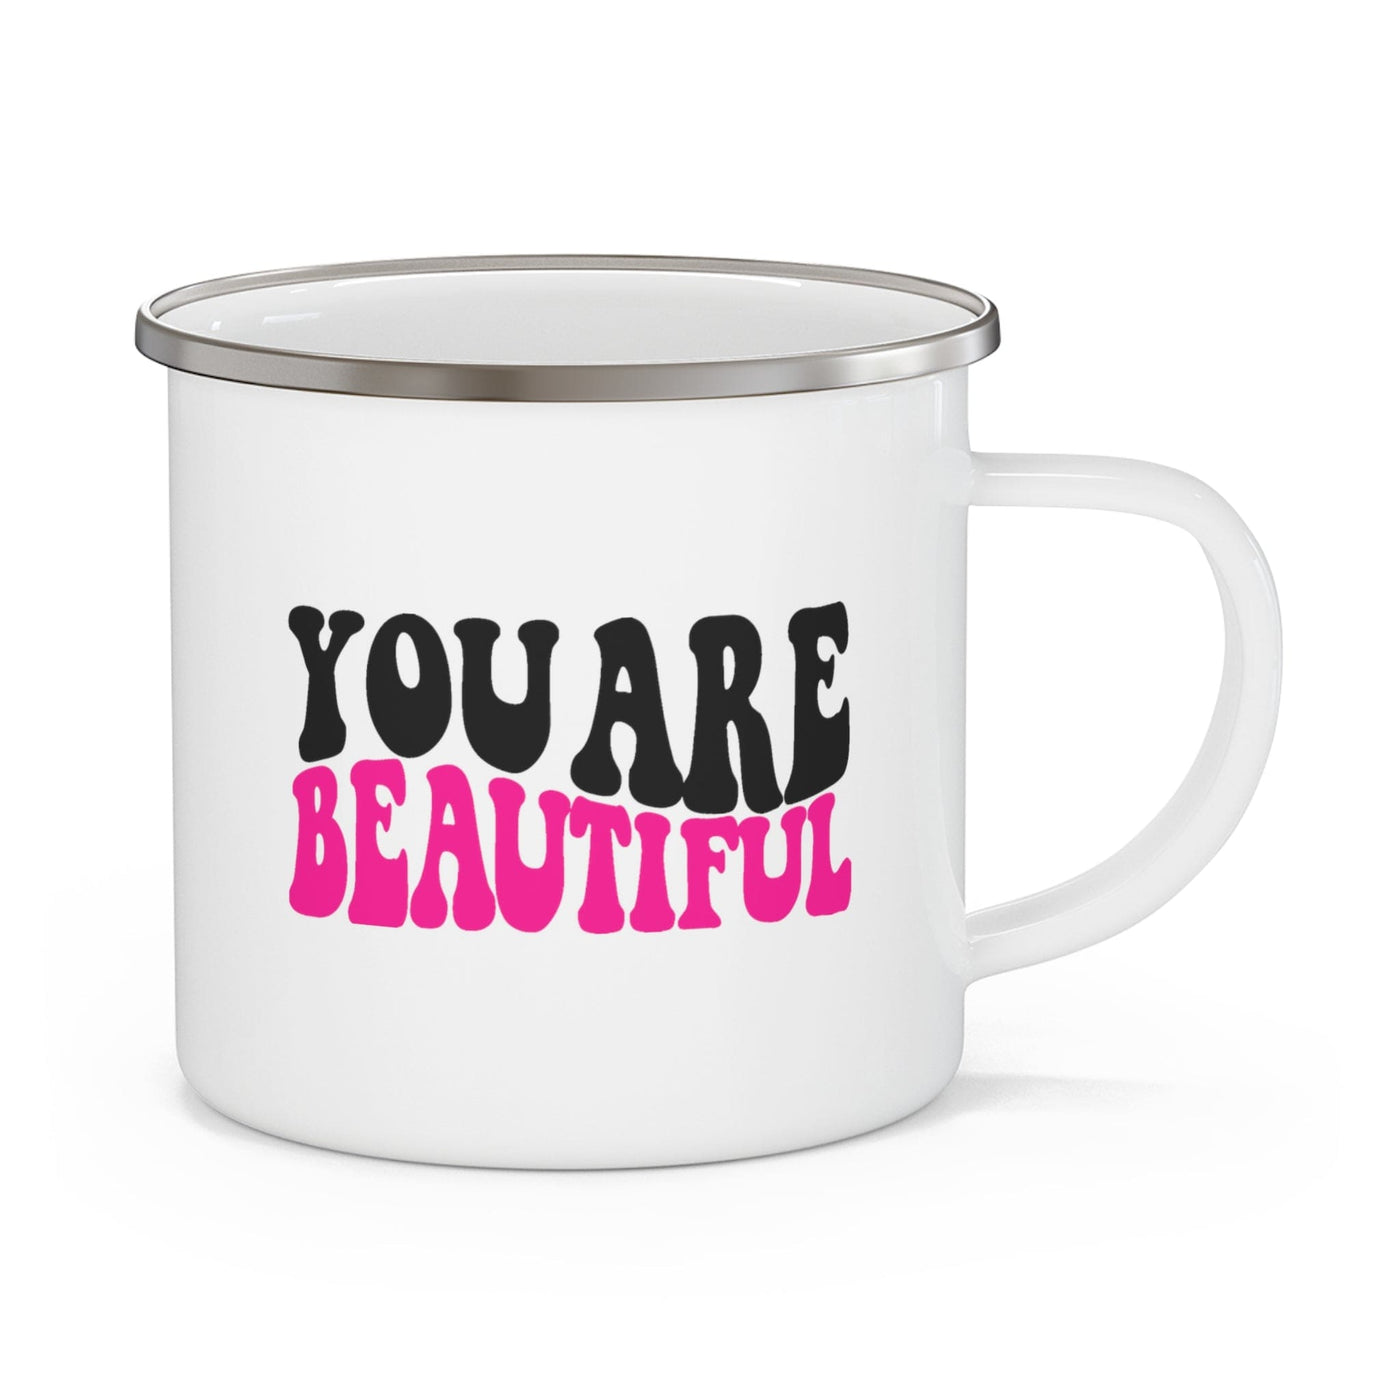 Enamel Camping Mug You Are Beautiful Print - Mug